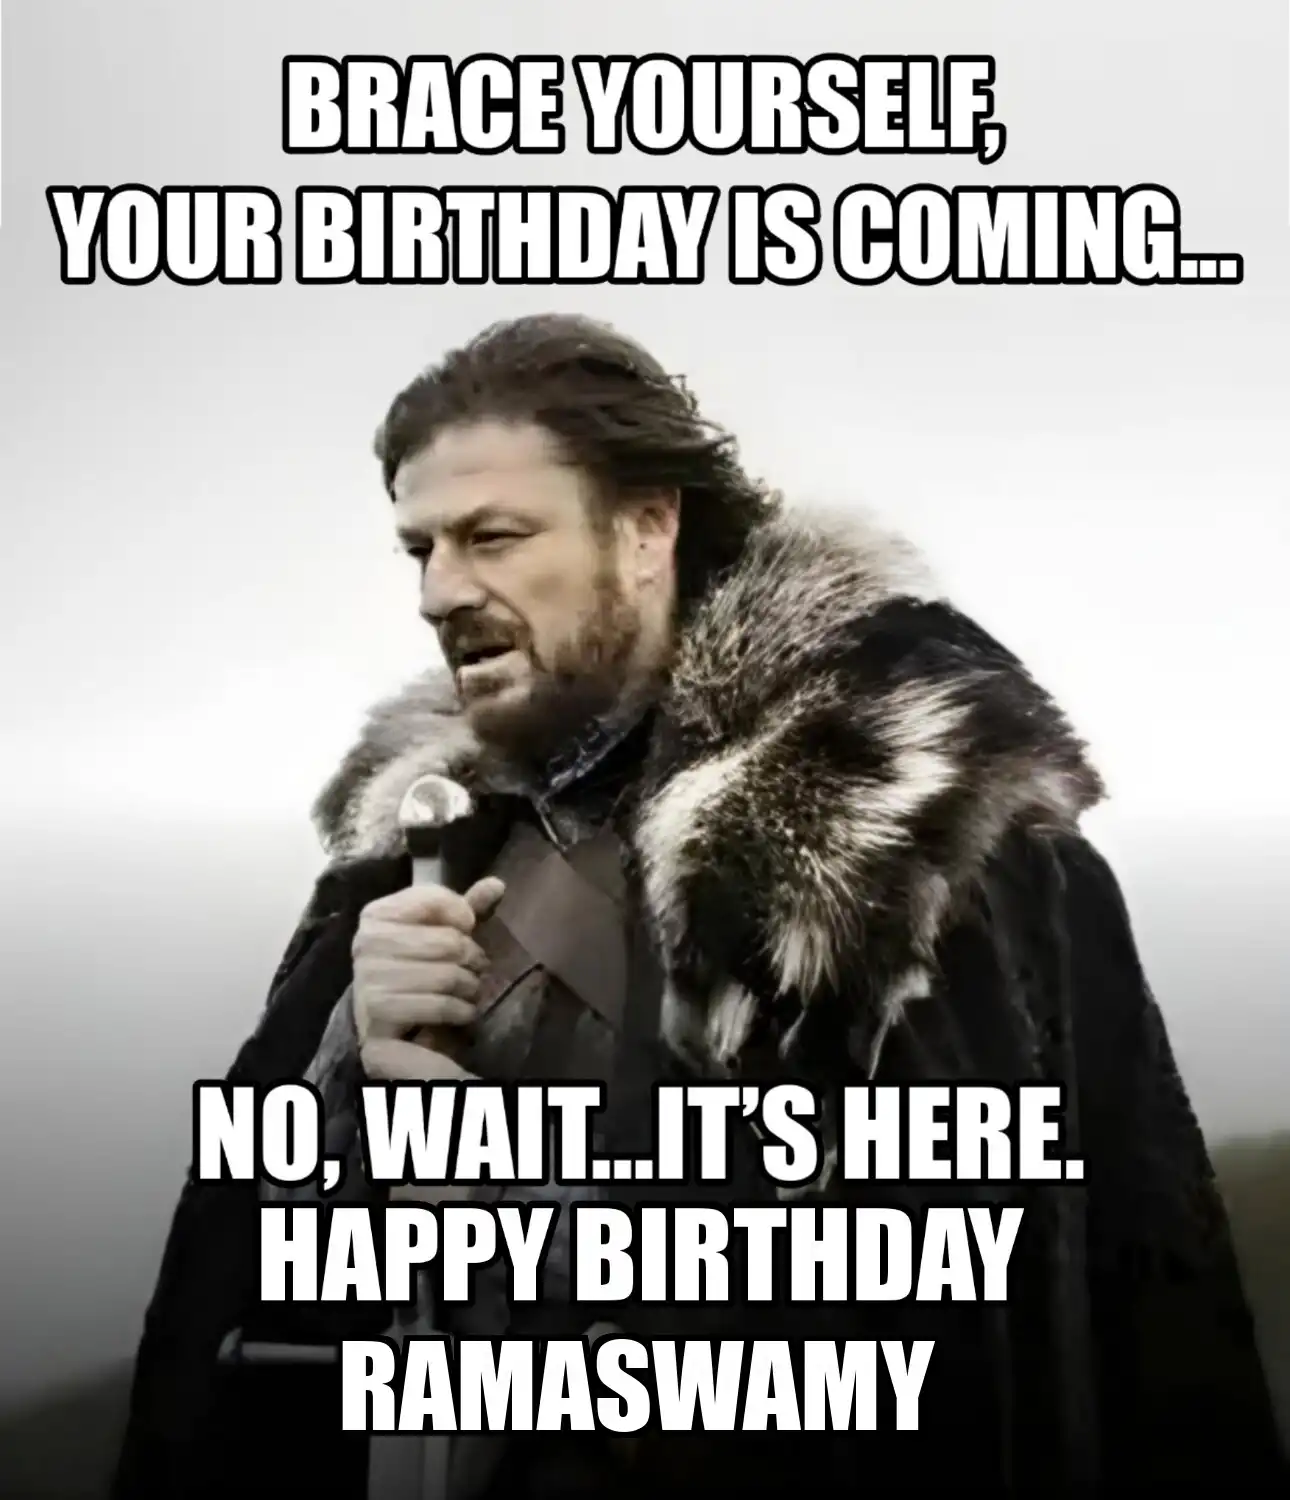 Happy Birthday Ramaswamy Brace Yourself Your Birthday Is Coming Meme